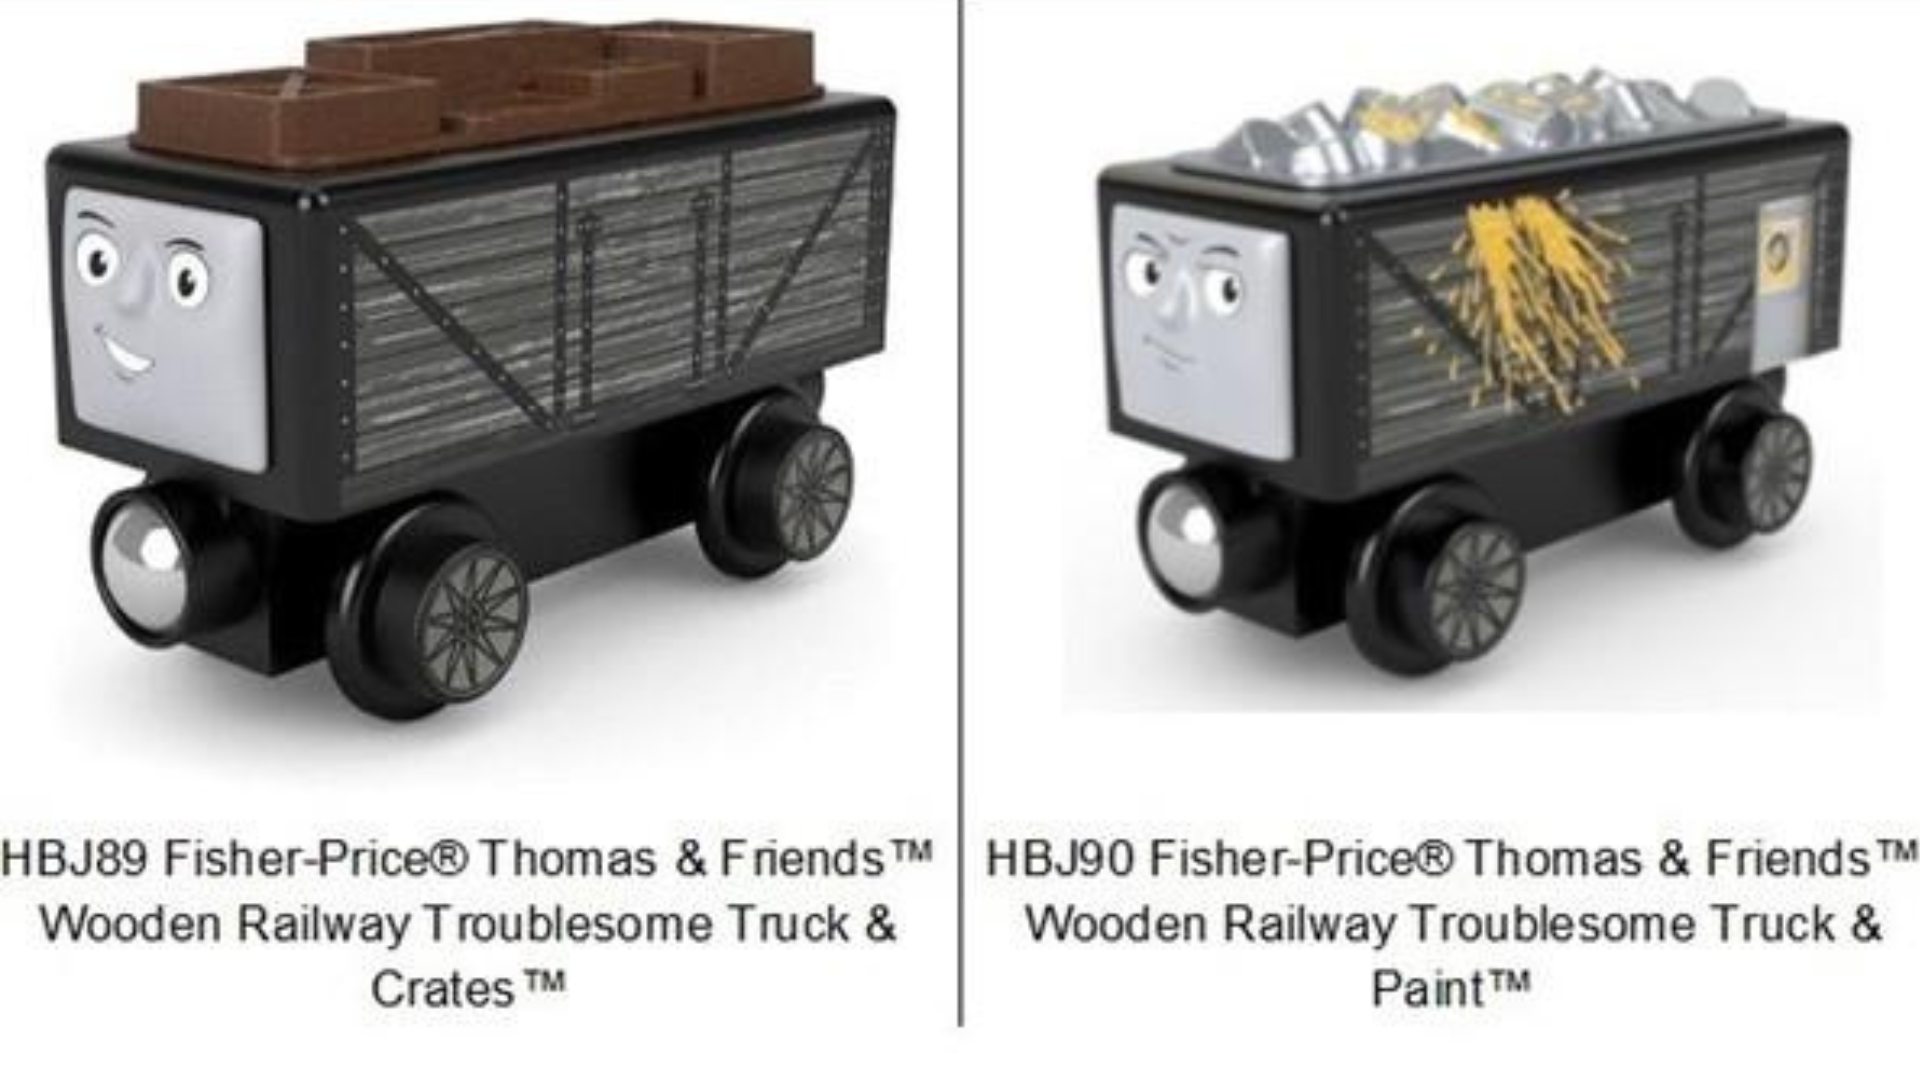 Health Canada recalls Thomas & Friends toy trains - Richmond News